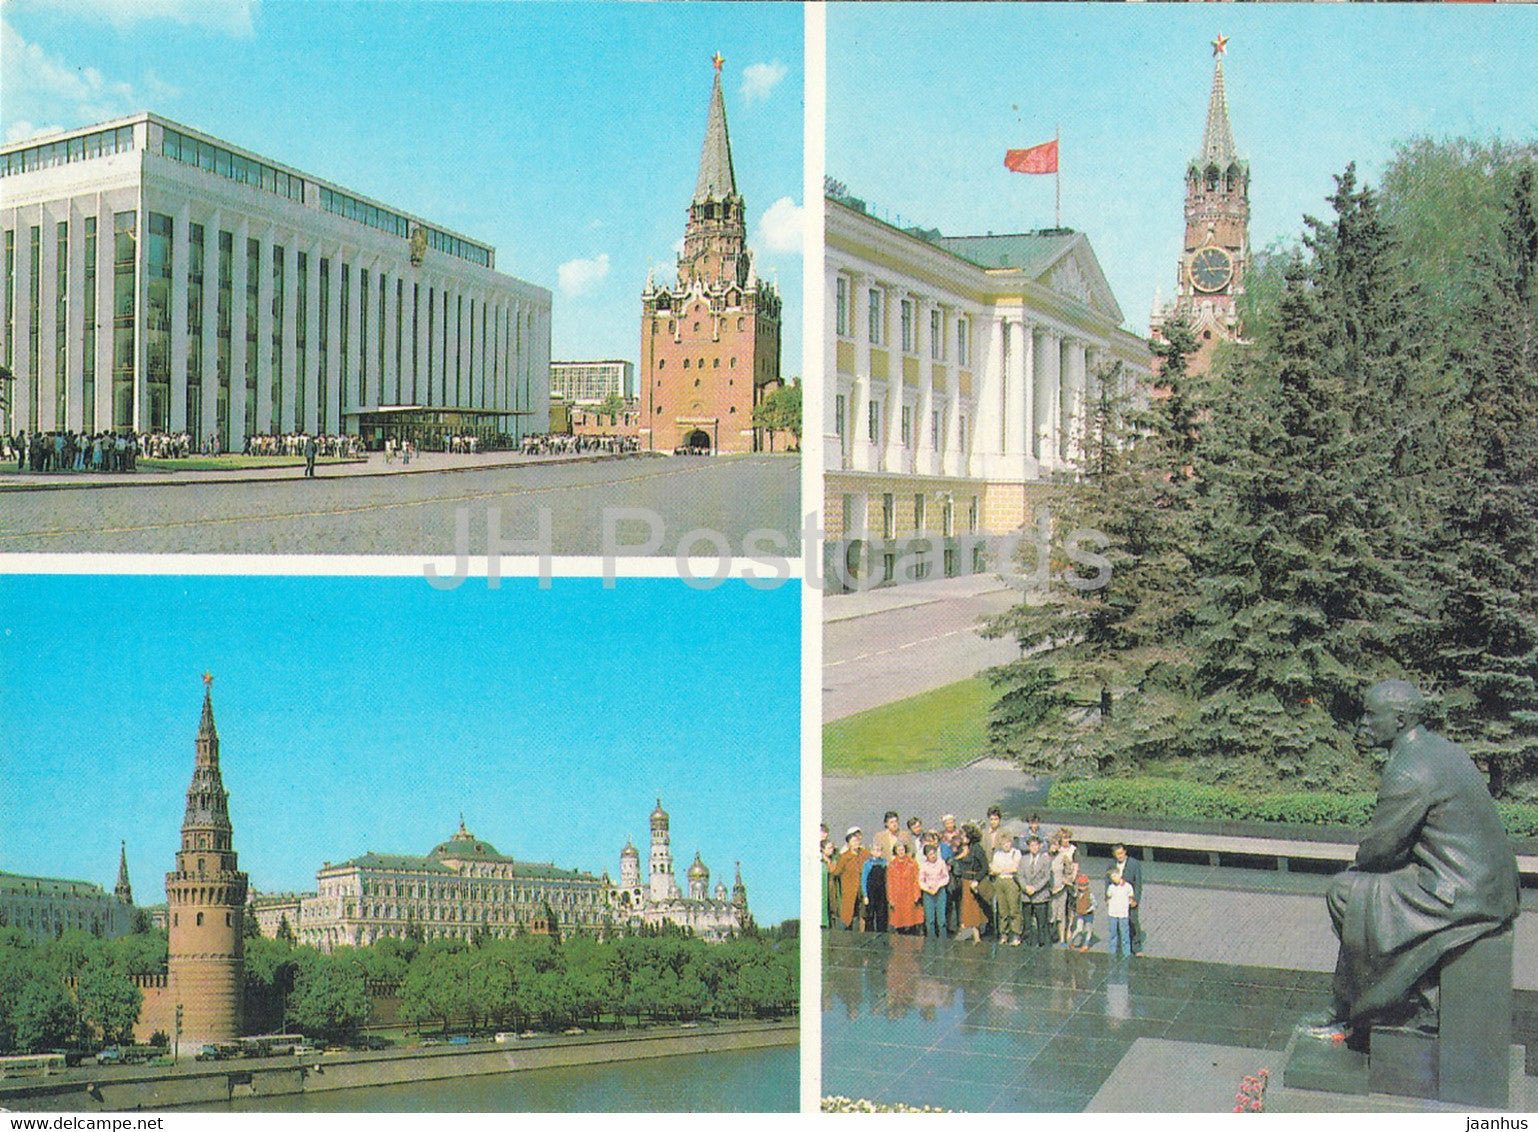 Moscow - Kremlin Palace of Congresses - Kremlin Palace - Lenin monument postal stationery - 1985 - Russia USSR - unused - JH Postcards